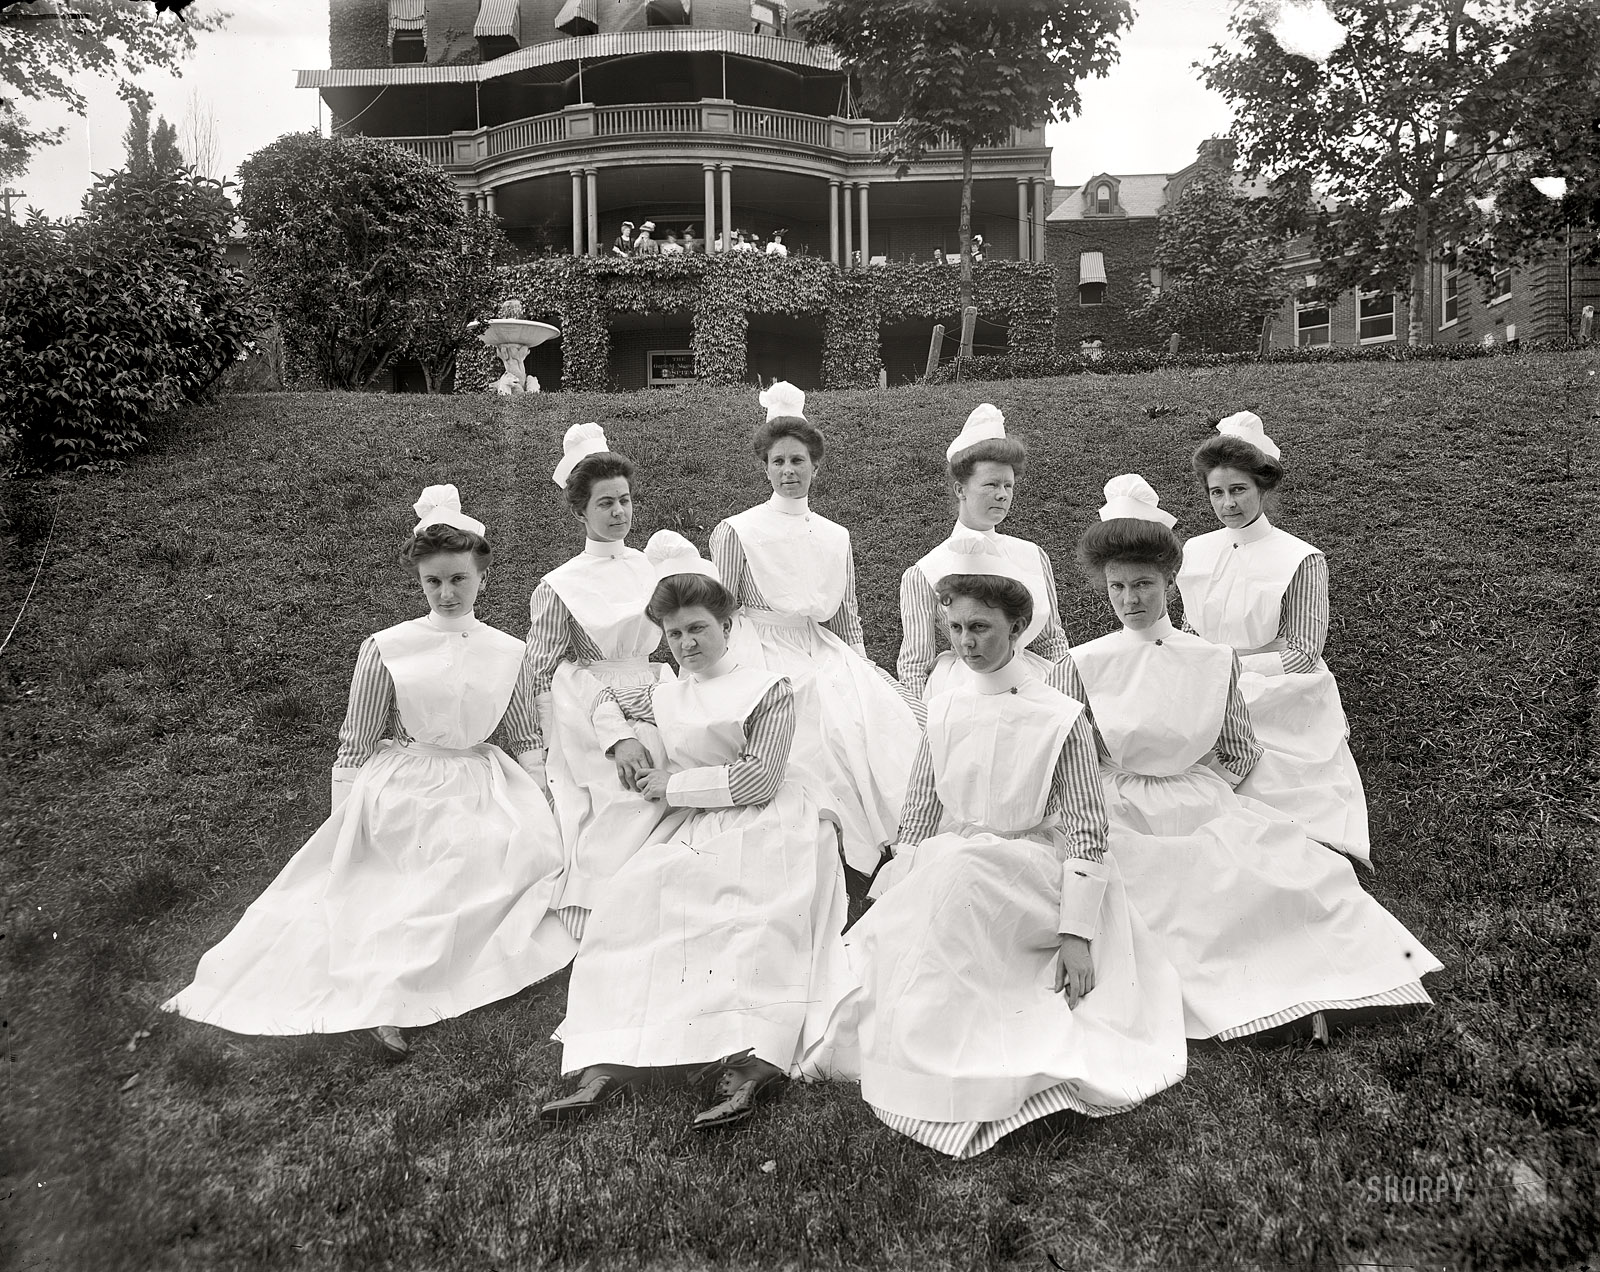 Washington, D.C., circa 1910. "Portrait of nurses on lawn." Harris & Ewing Collection glass negative. View full size.